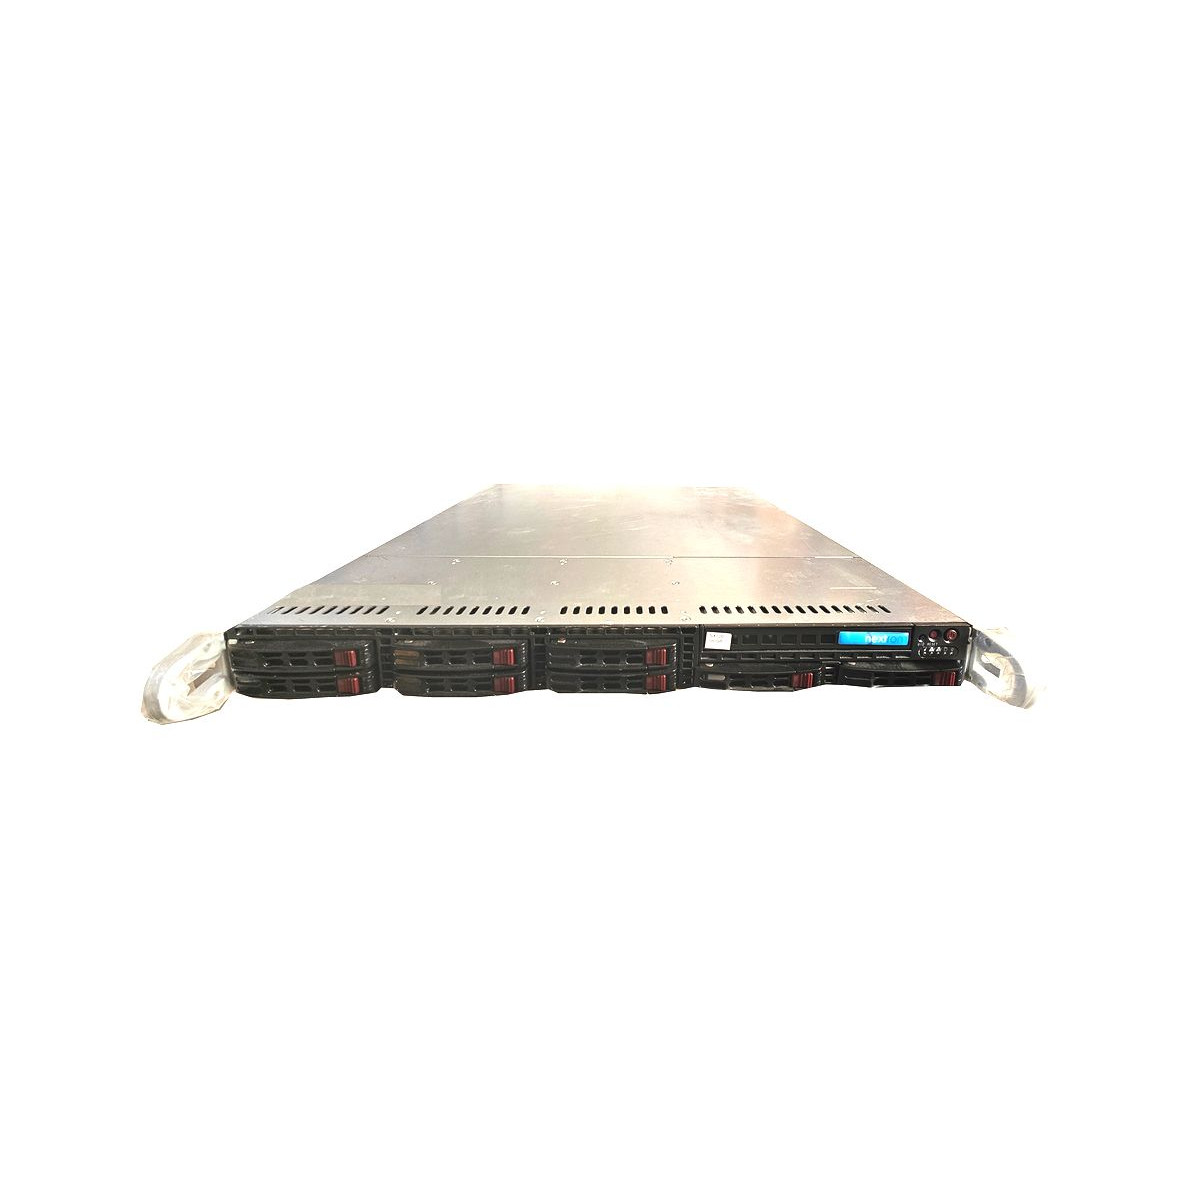 SUPERMICRO SC113M E3-1241 V3 16GB 8x2,5 2PSU CP400i